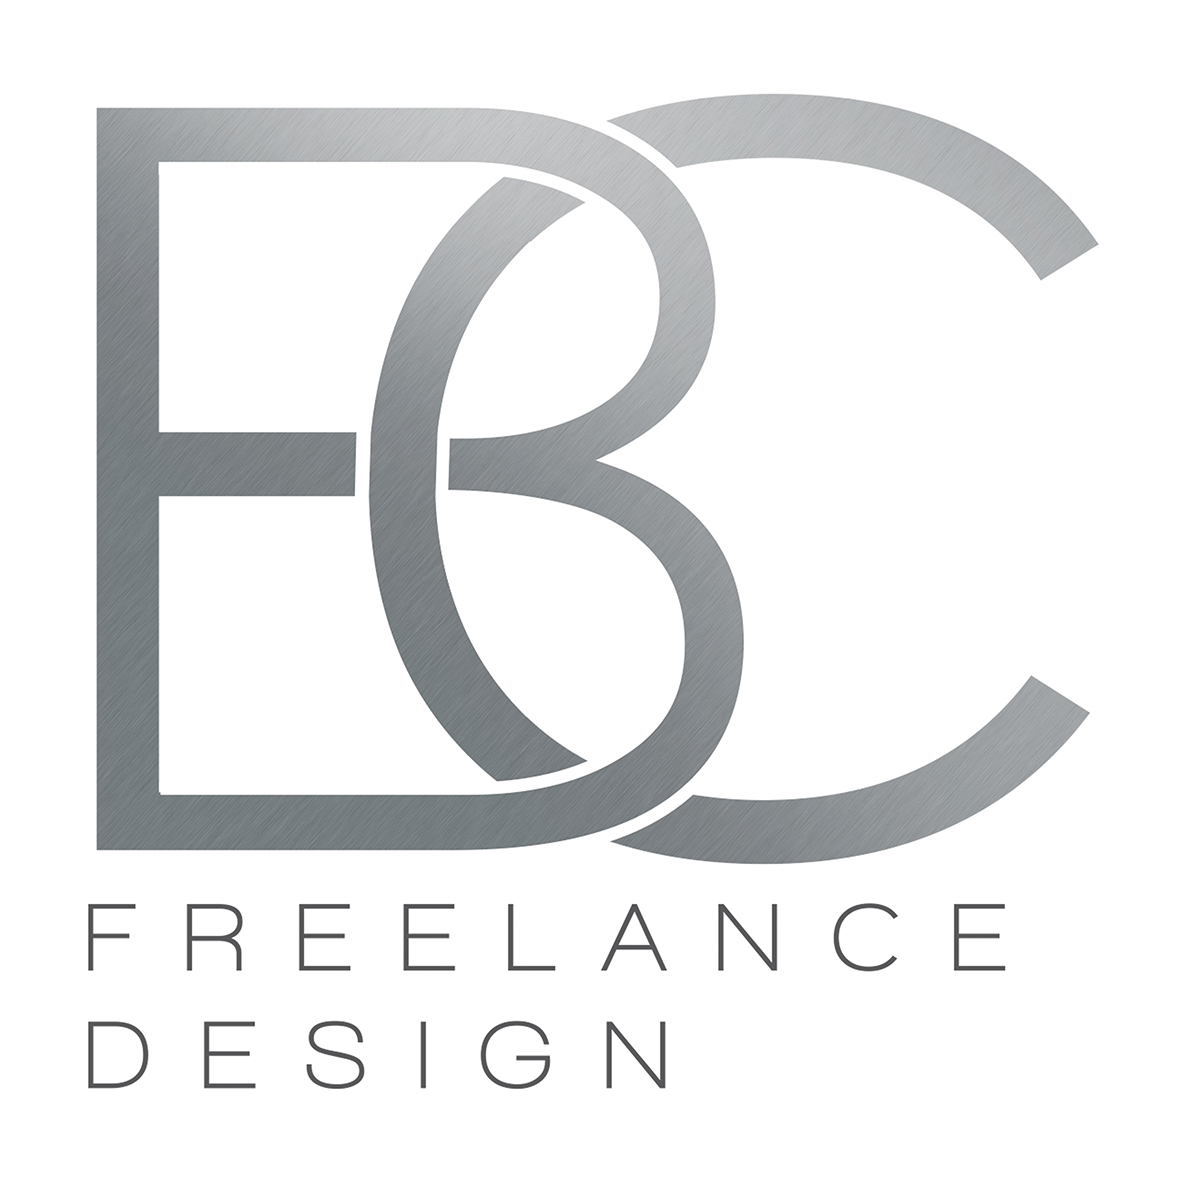 BC freelance design - Accommodation Resorts